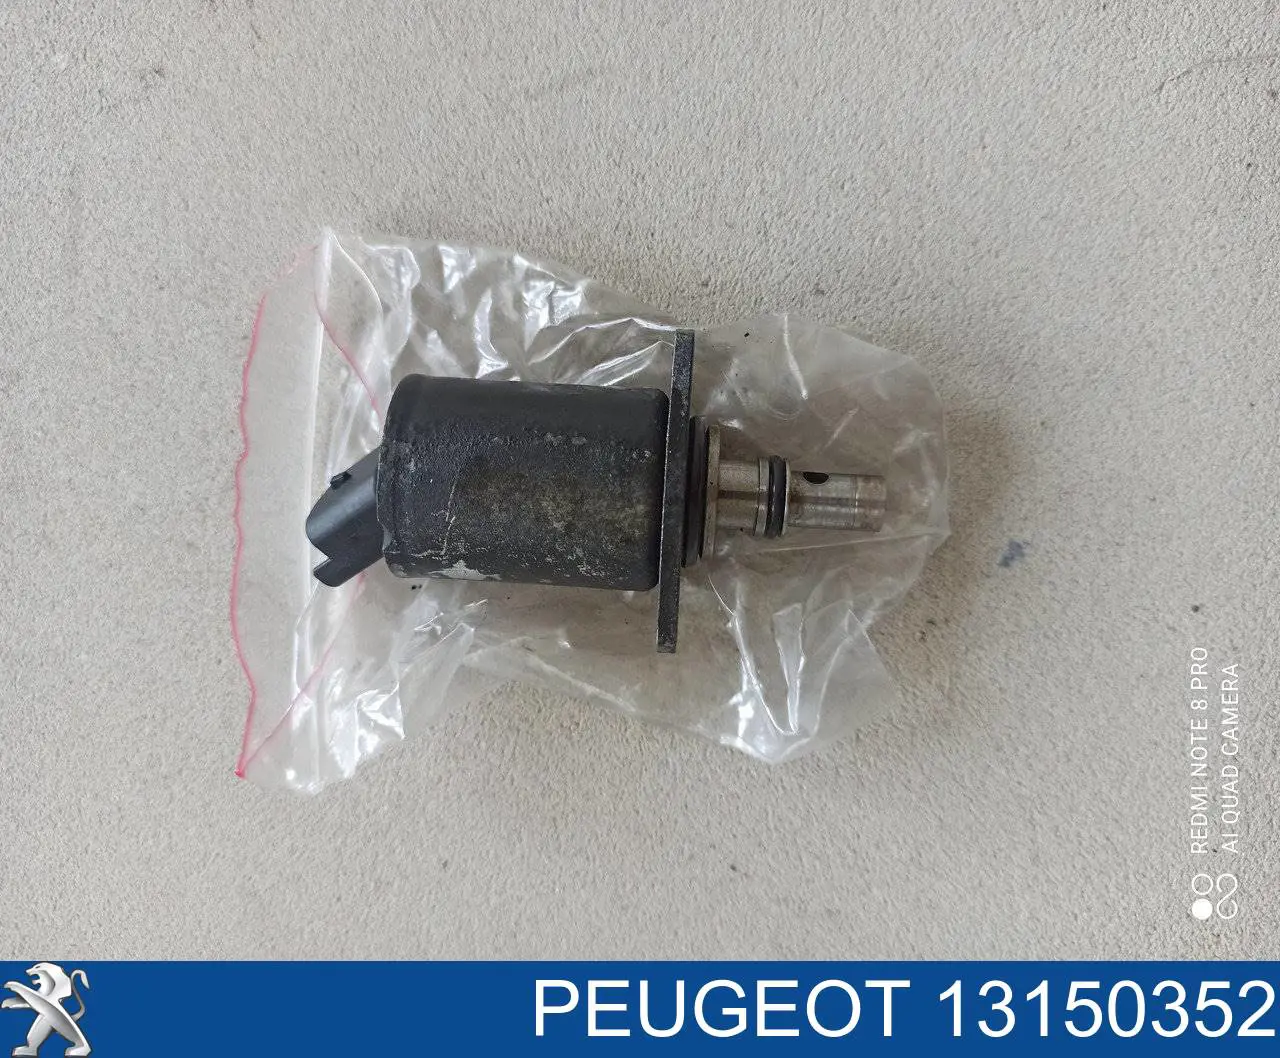 13150352 Peugeot/Citroen клапан тнвд отсечки топлива (дизель-стоп)